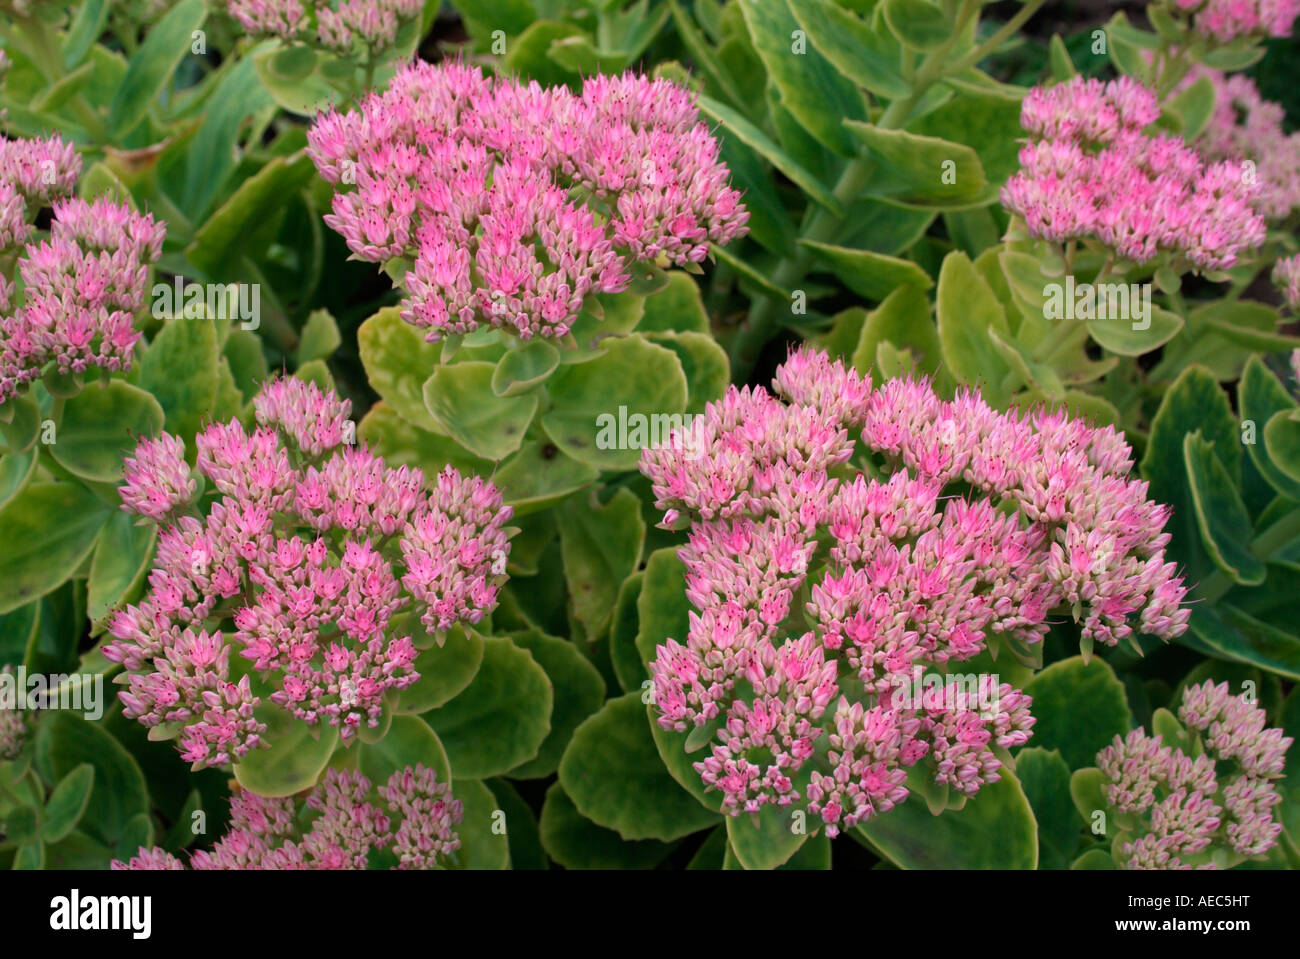 The pink flowers of Sedum spectabile (Ice plant) Stock Photo